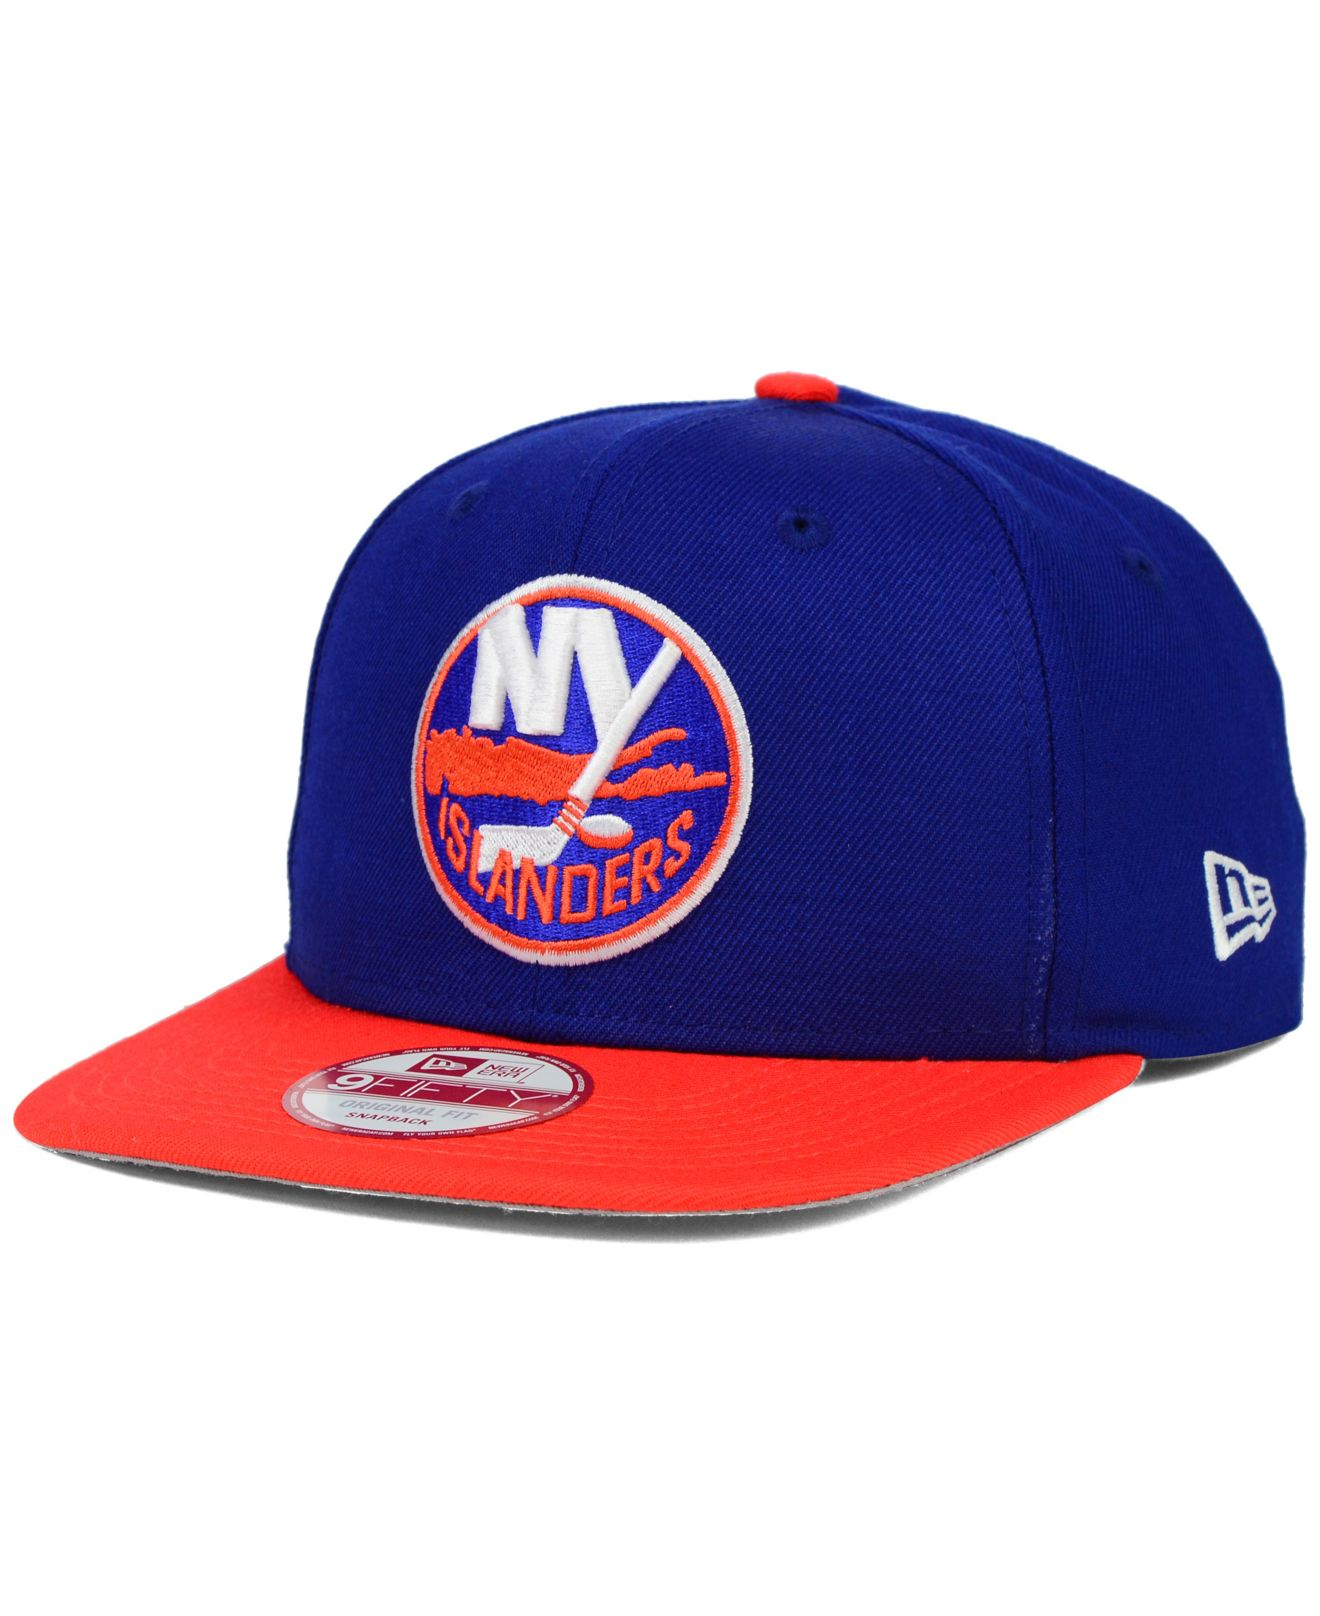 New Era NHL 9Fifty New York Rangers 2 Tone Royal Blue/Red Snapback Cap